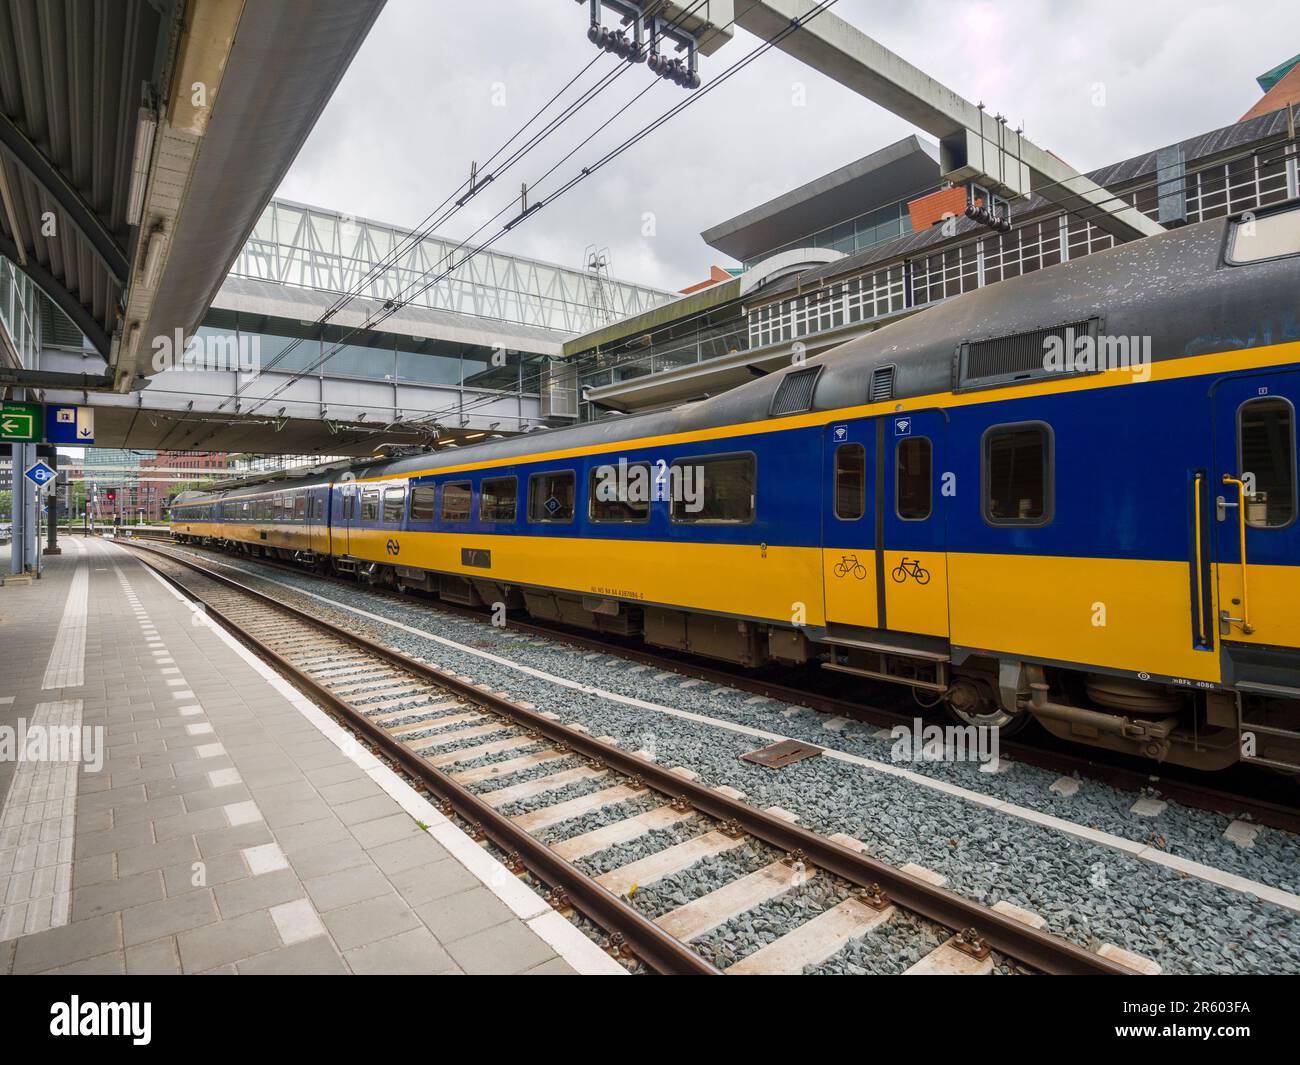 An NS (Dutch Railways) passenger train at Amersfoort Central railway station, Netherlands, Europe. Stock Photo